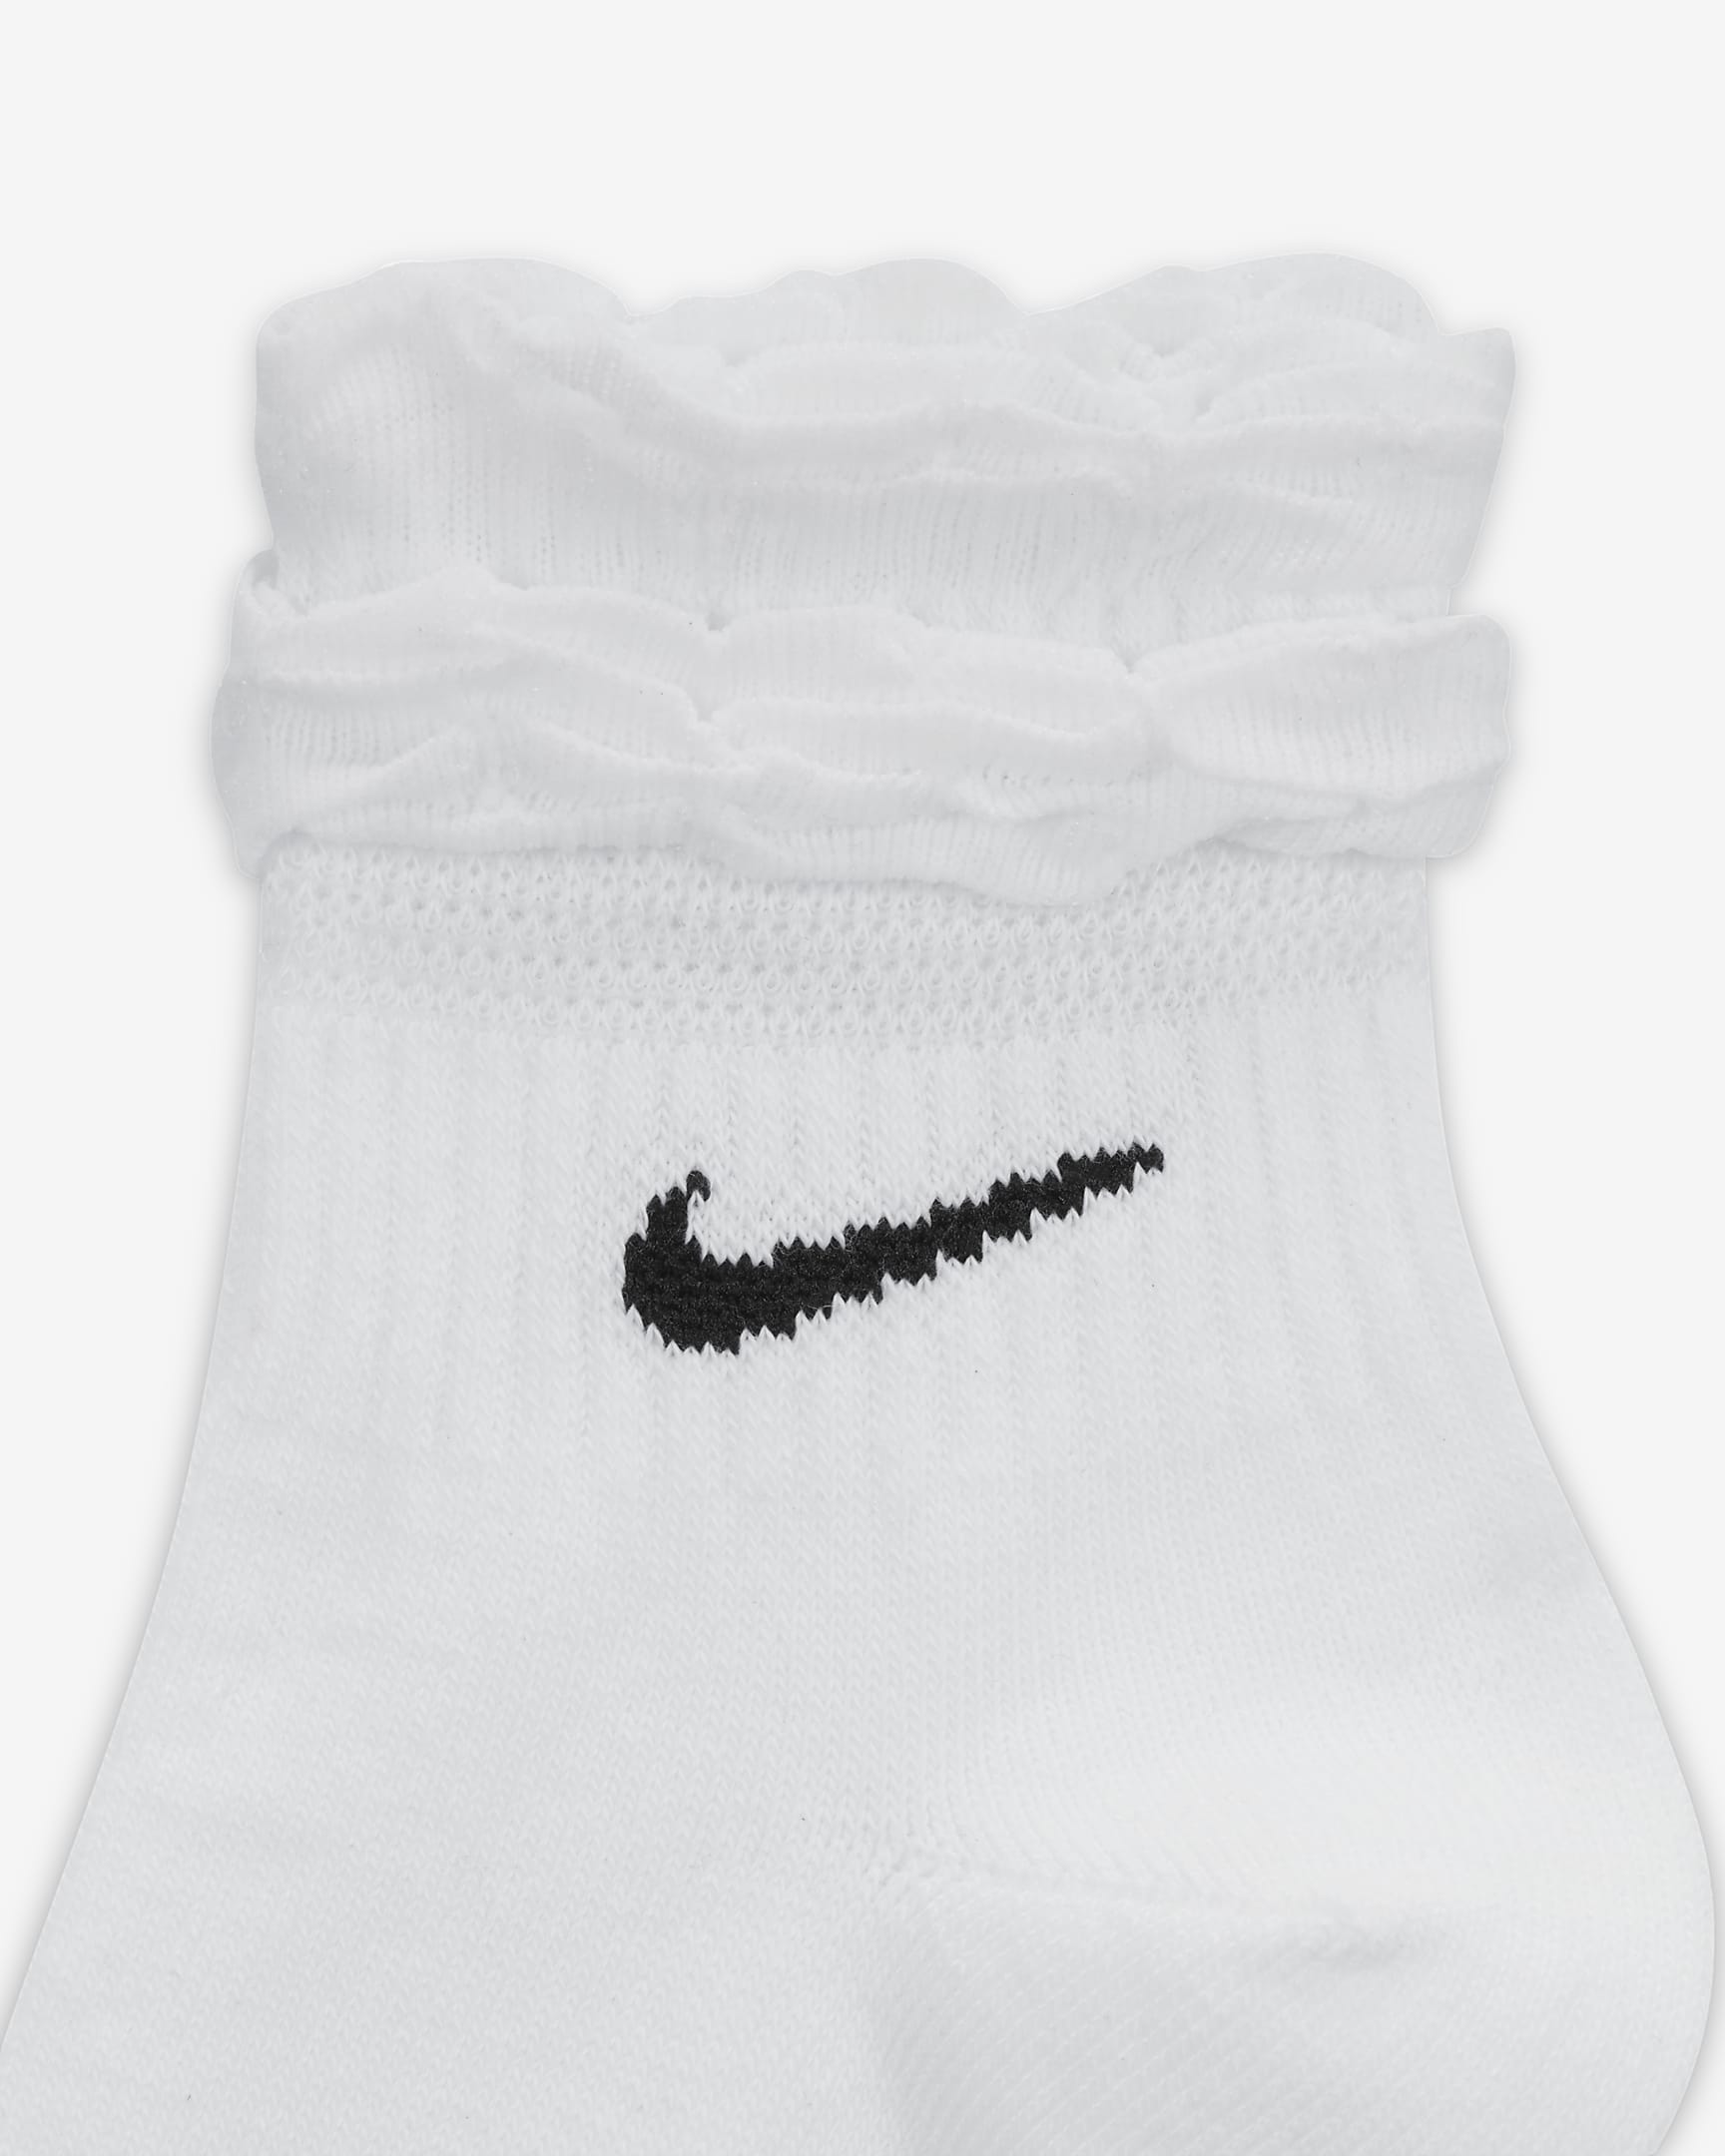 Nike Everyday Training Ankle Socks - White/Black